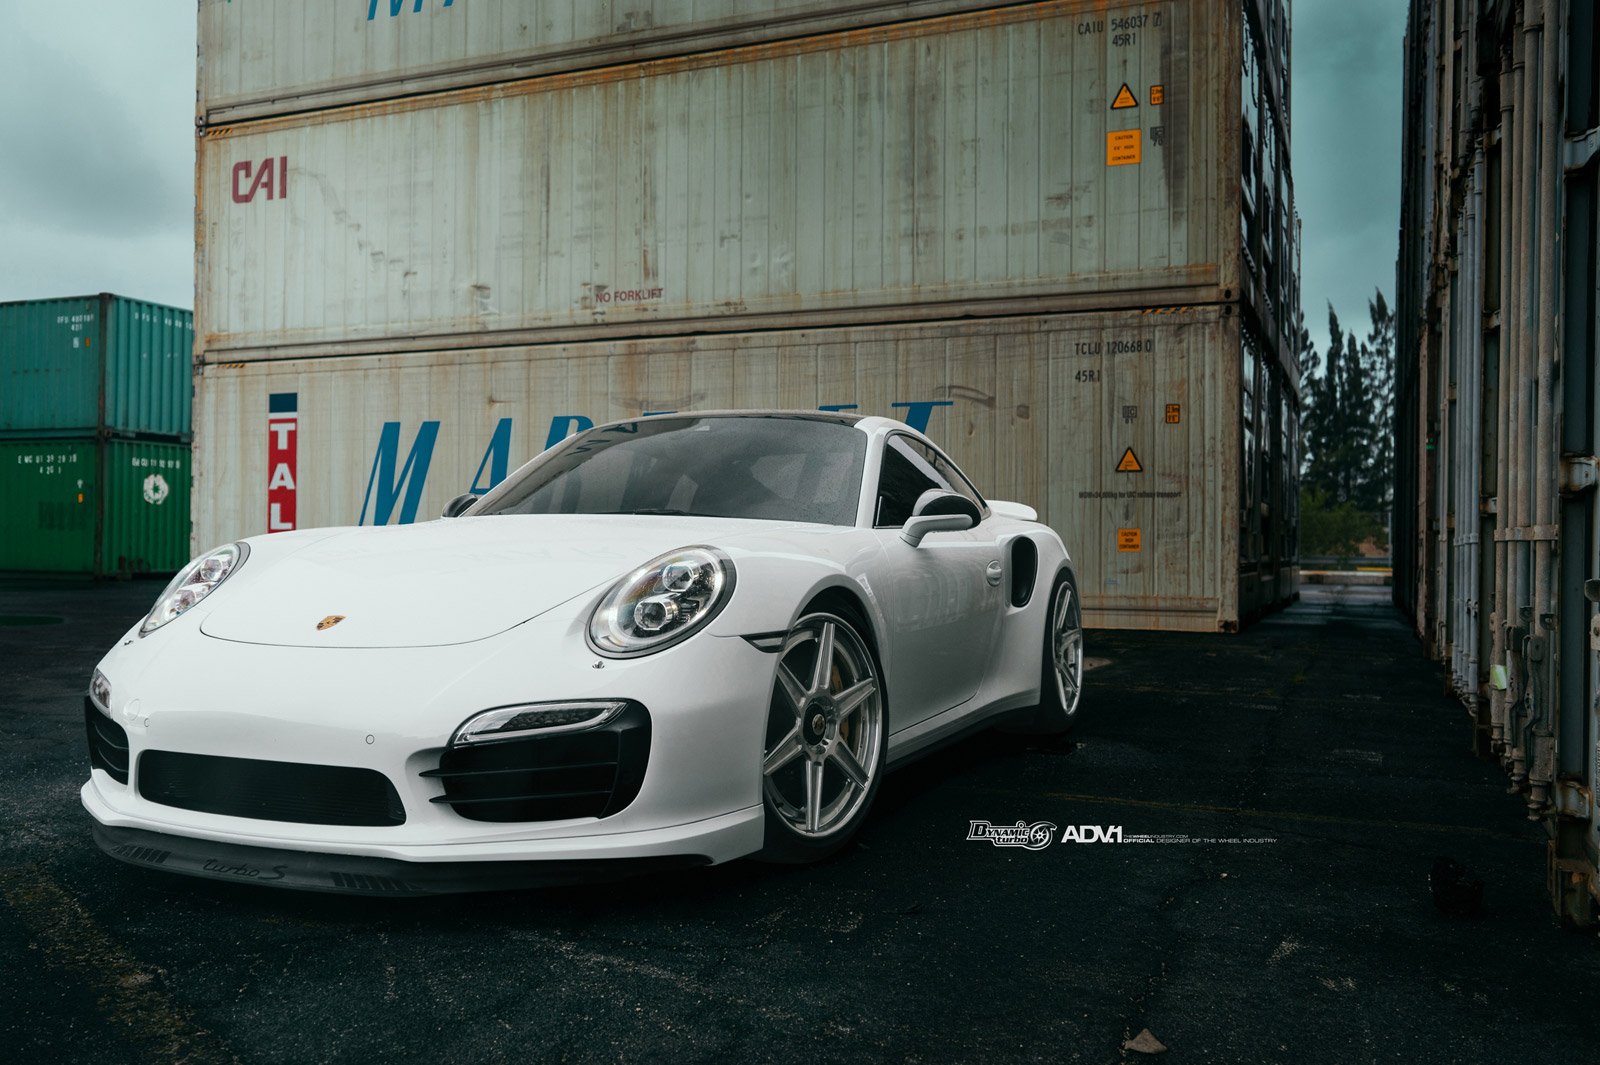 2015, Adv1, Wheels, Porsche, 991, Turbo, Cars, Coupe, Tuning Wallpaper